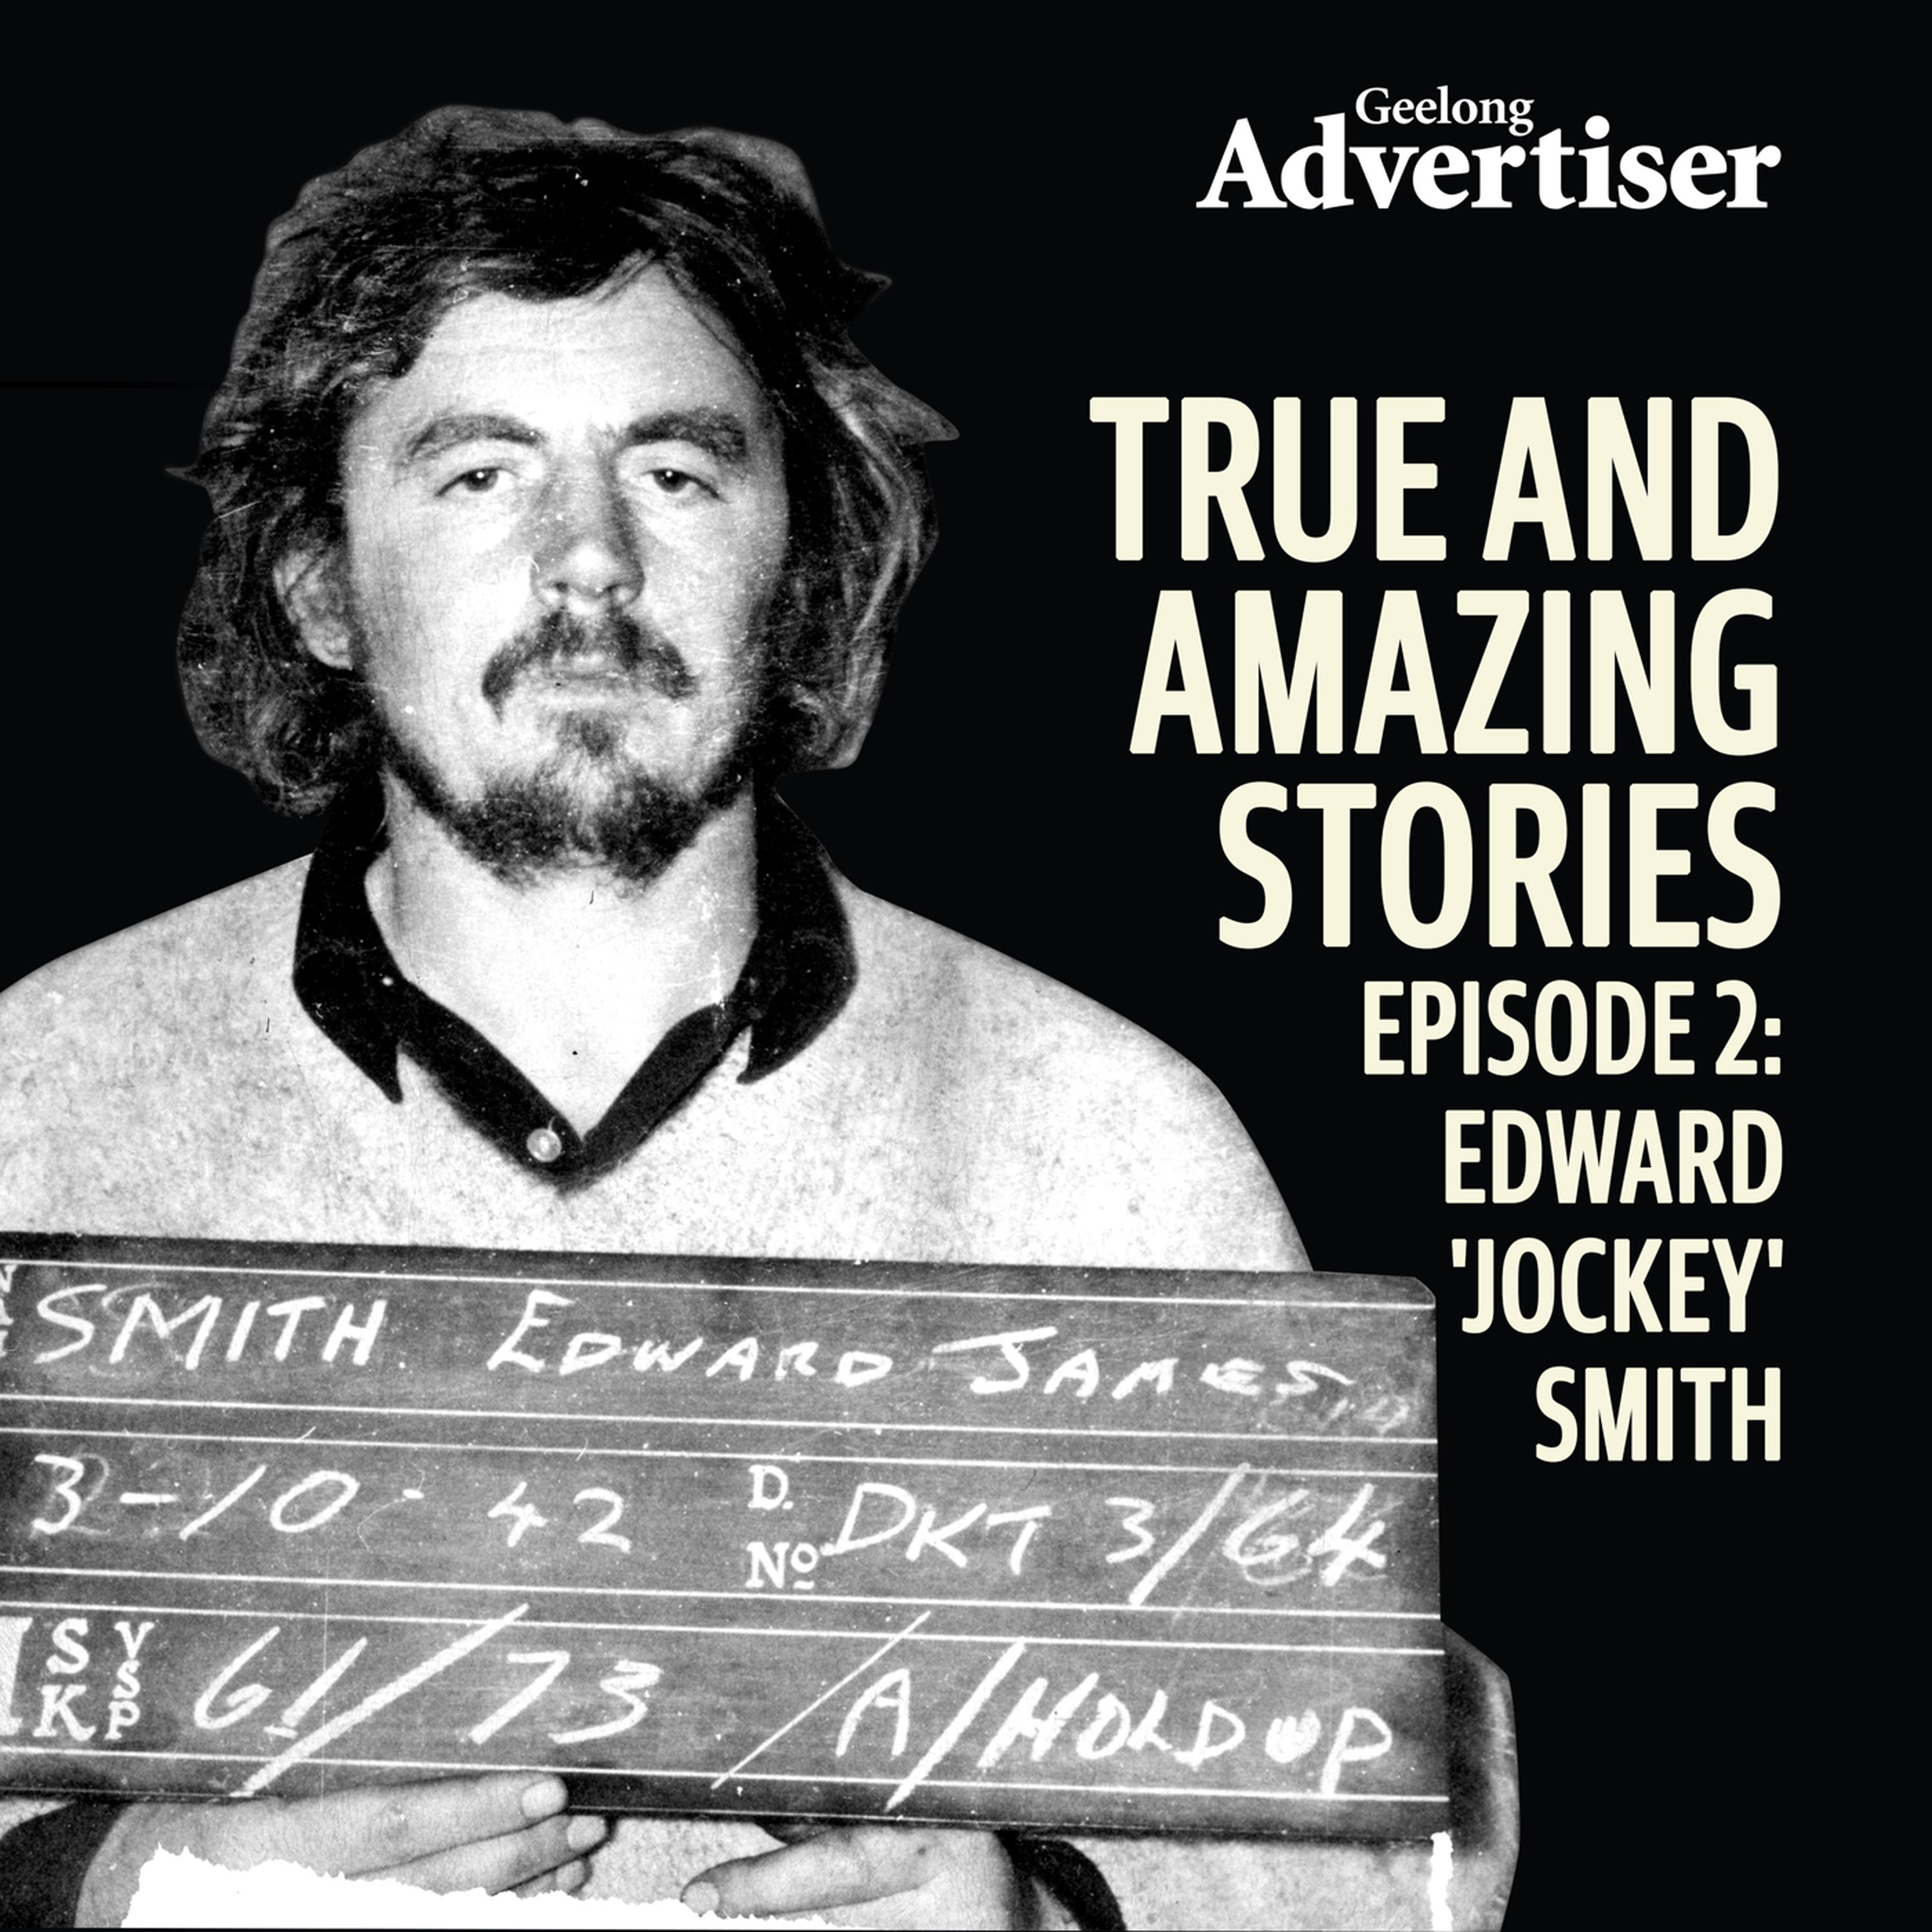 True and Amazing Stories Episode 2: Jockey Smith